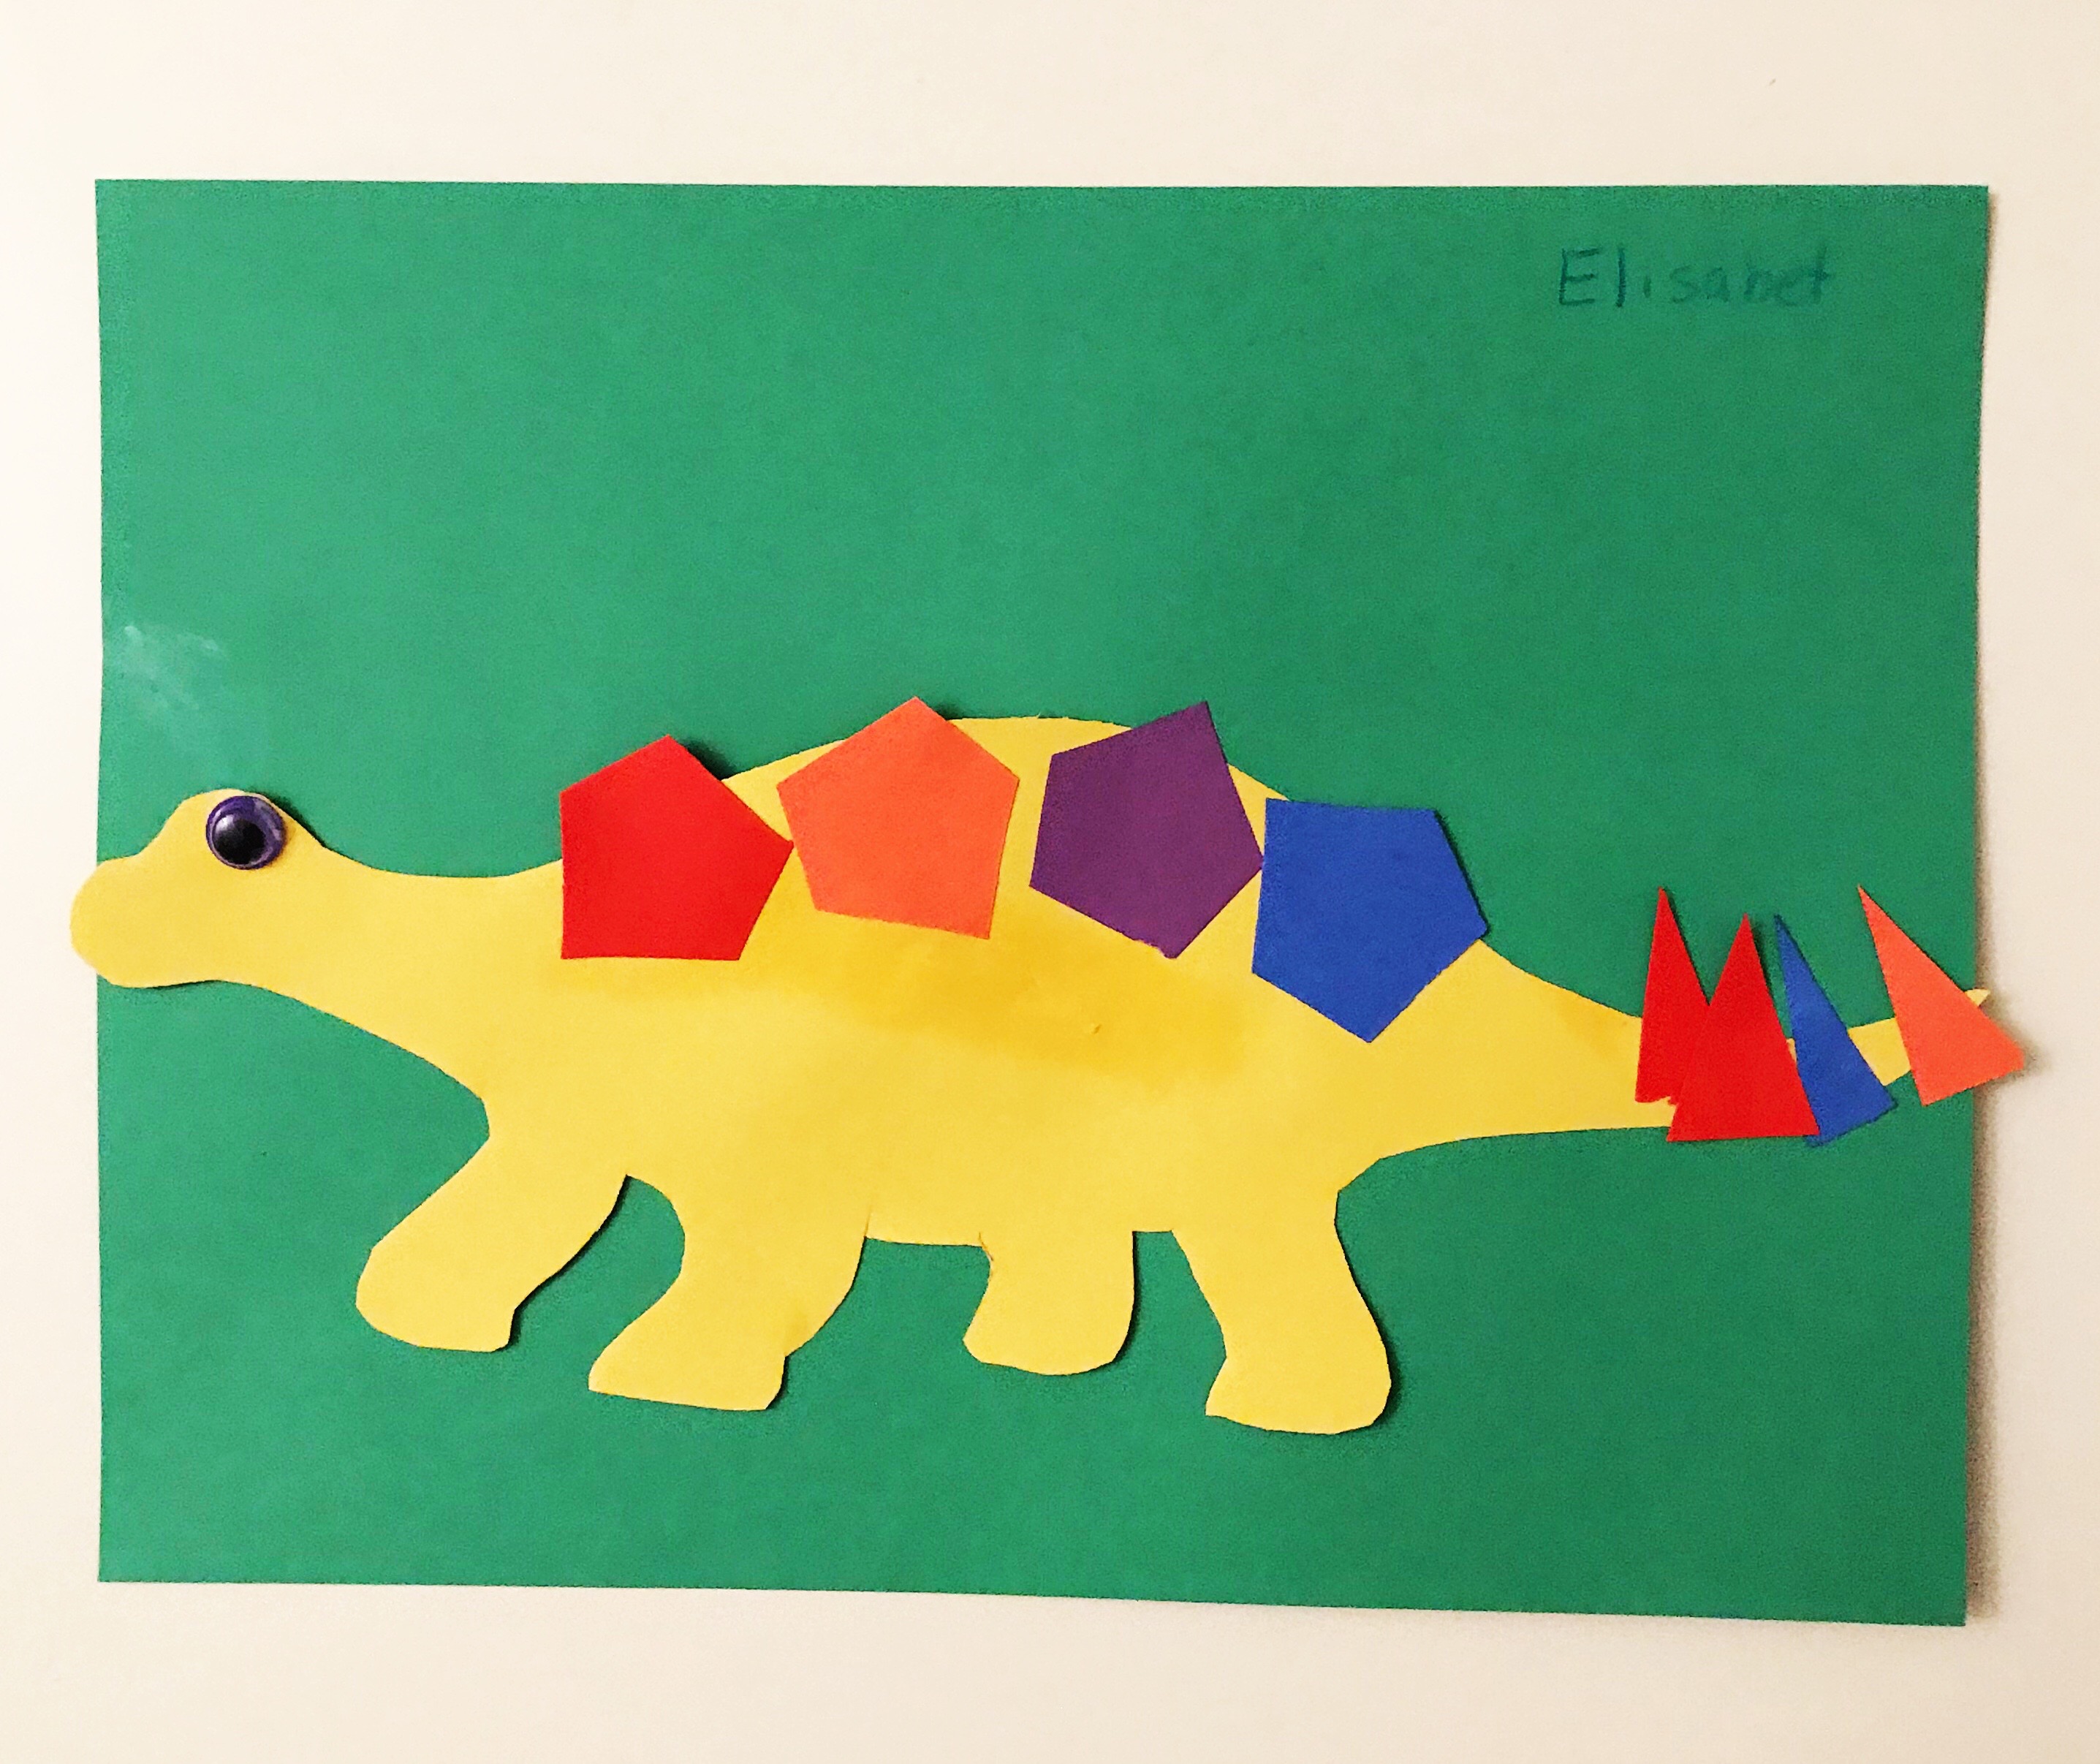 dinosaur-preschool-activities-ms-stephanie-s-preschool